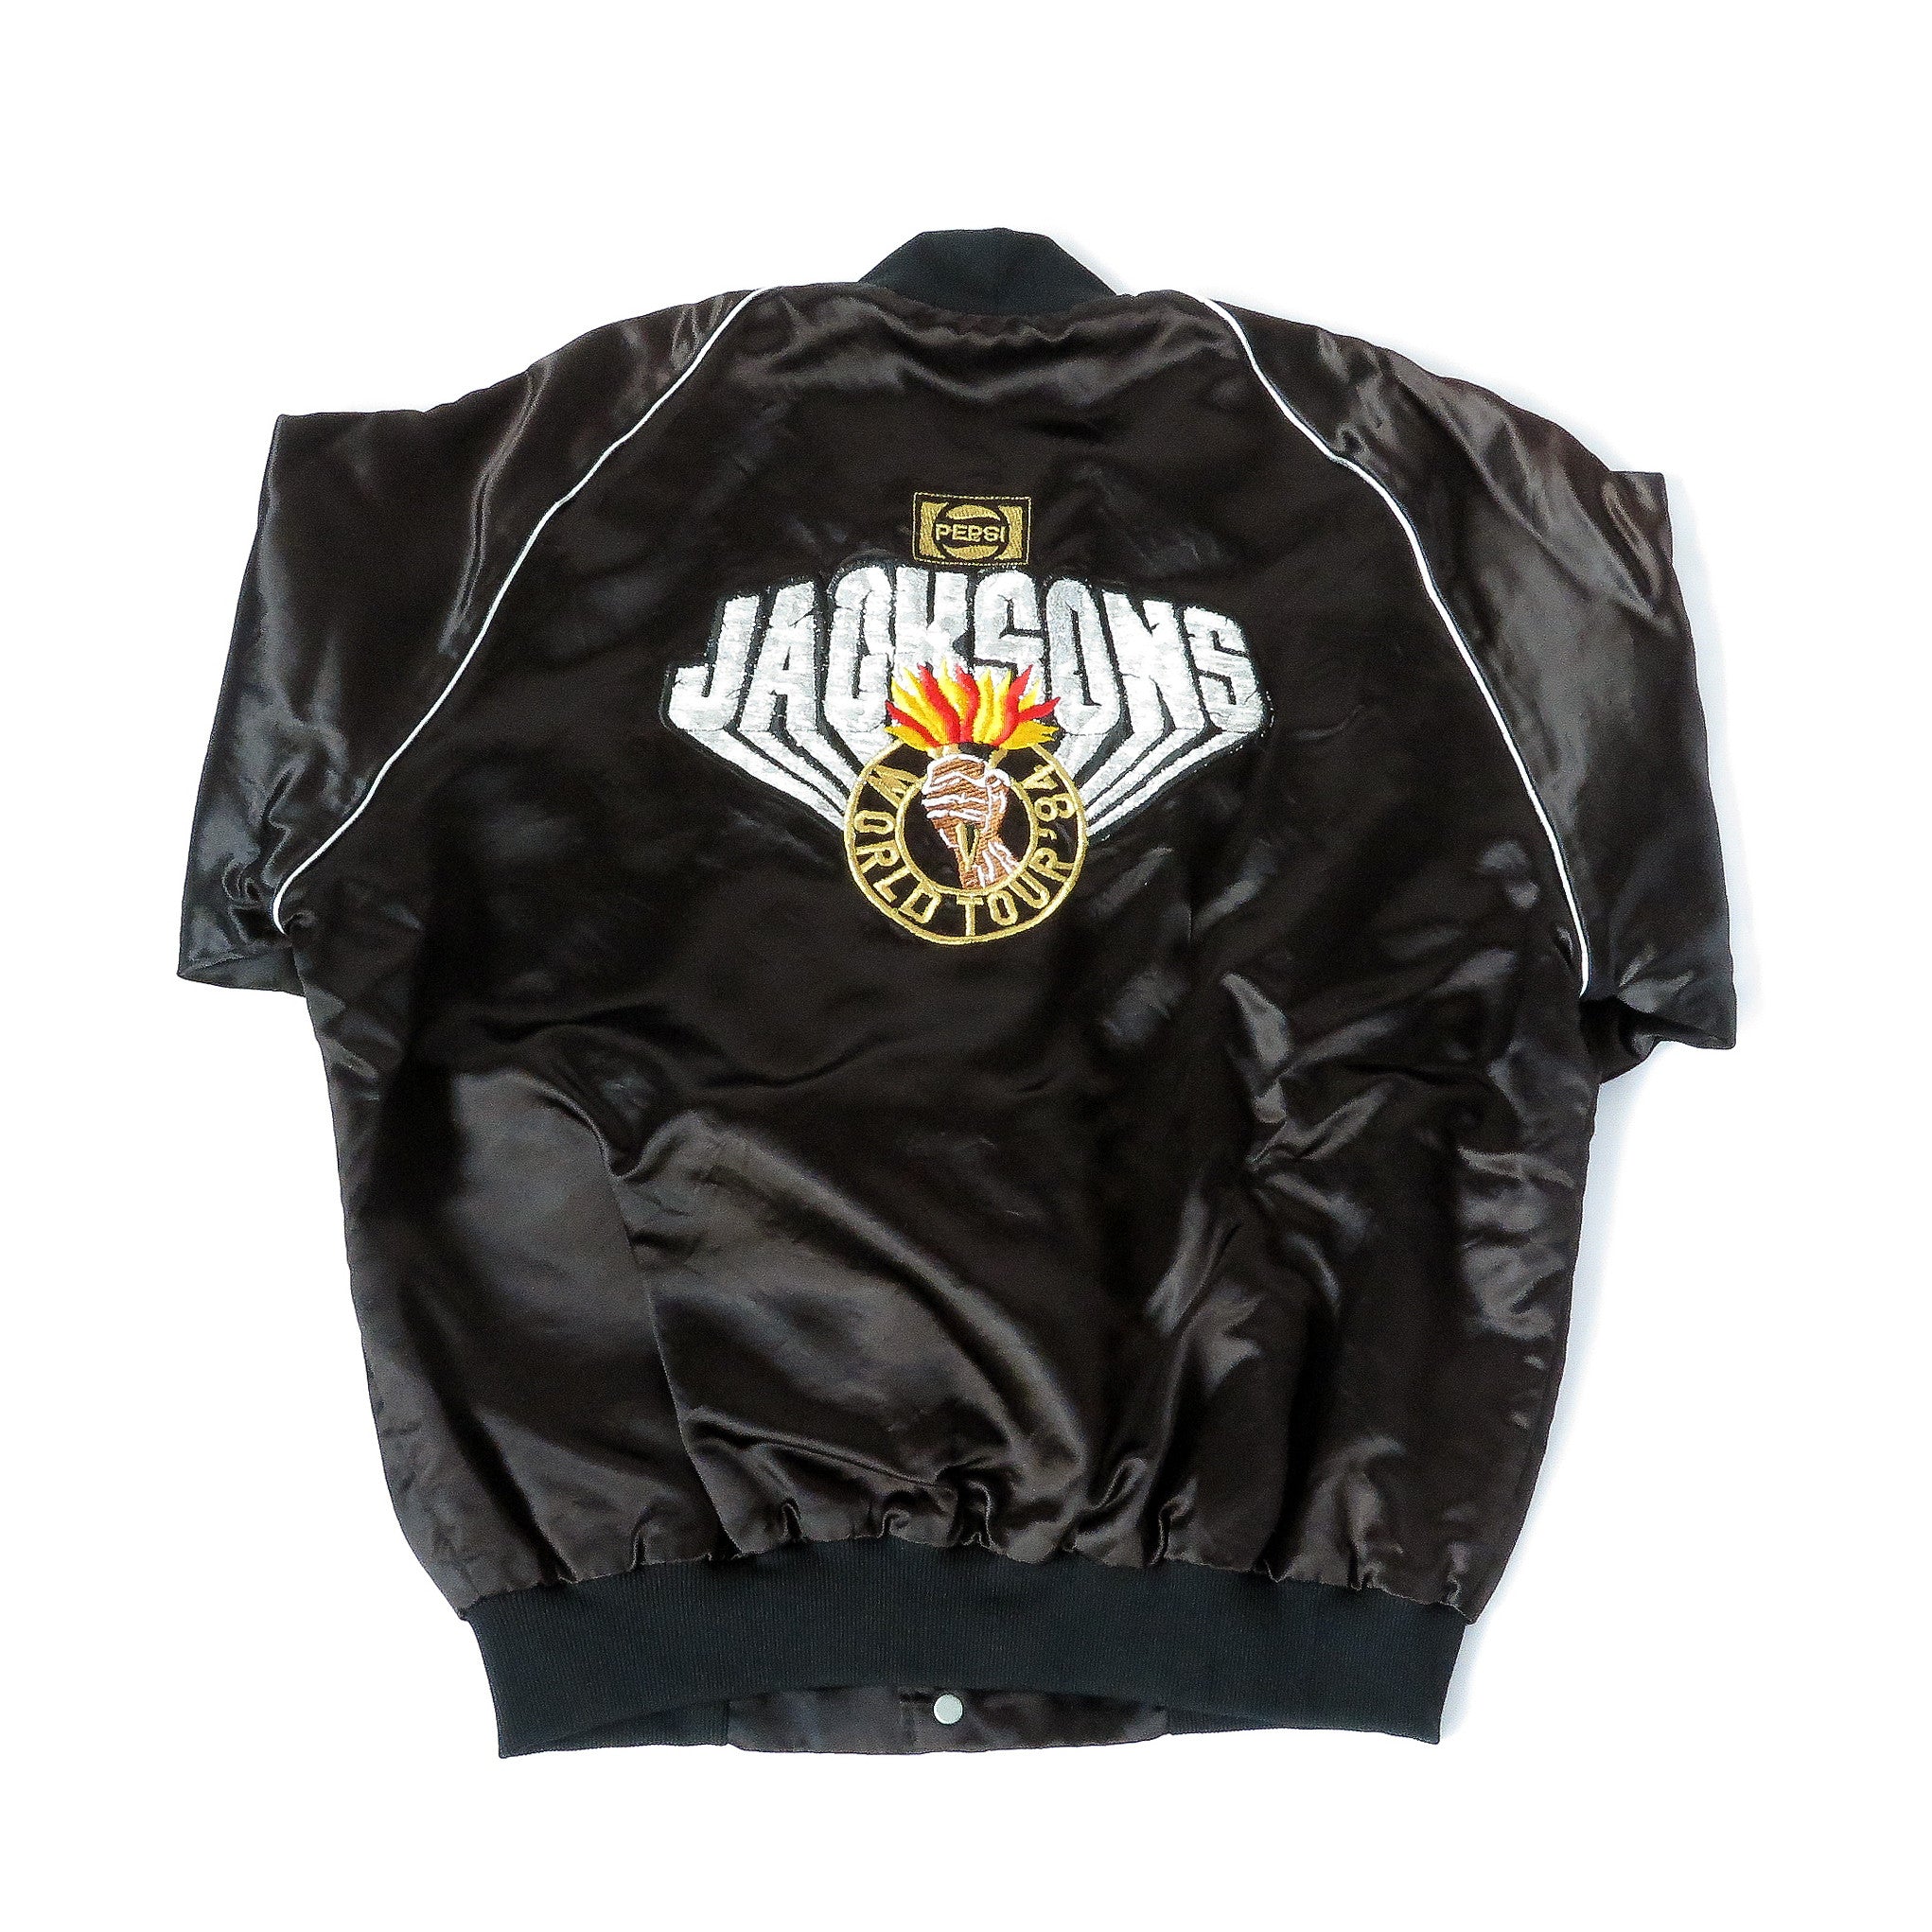 Vintage Jacksons 1984 World Tour Jacket Sz M